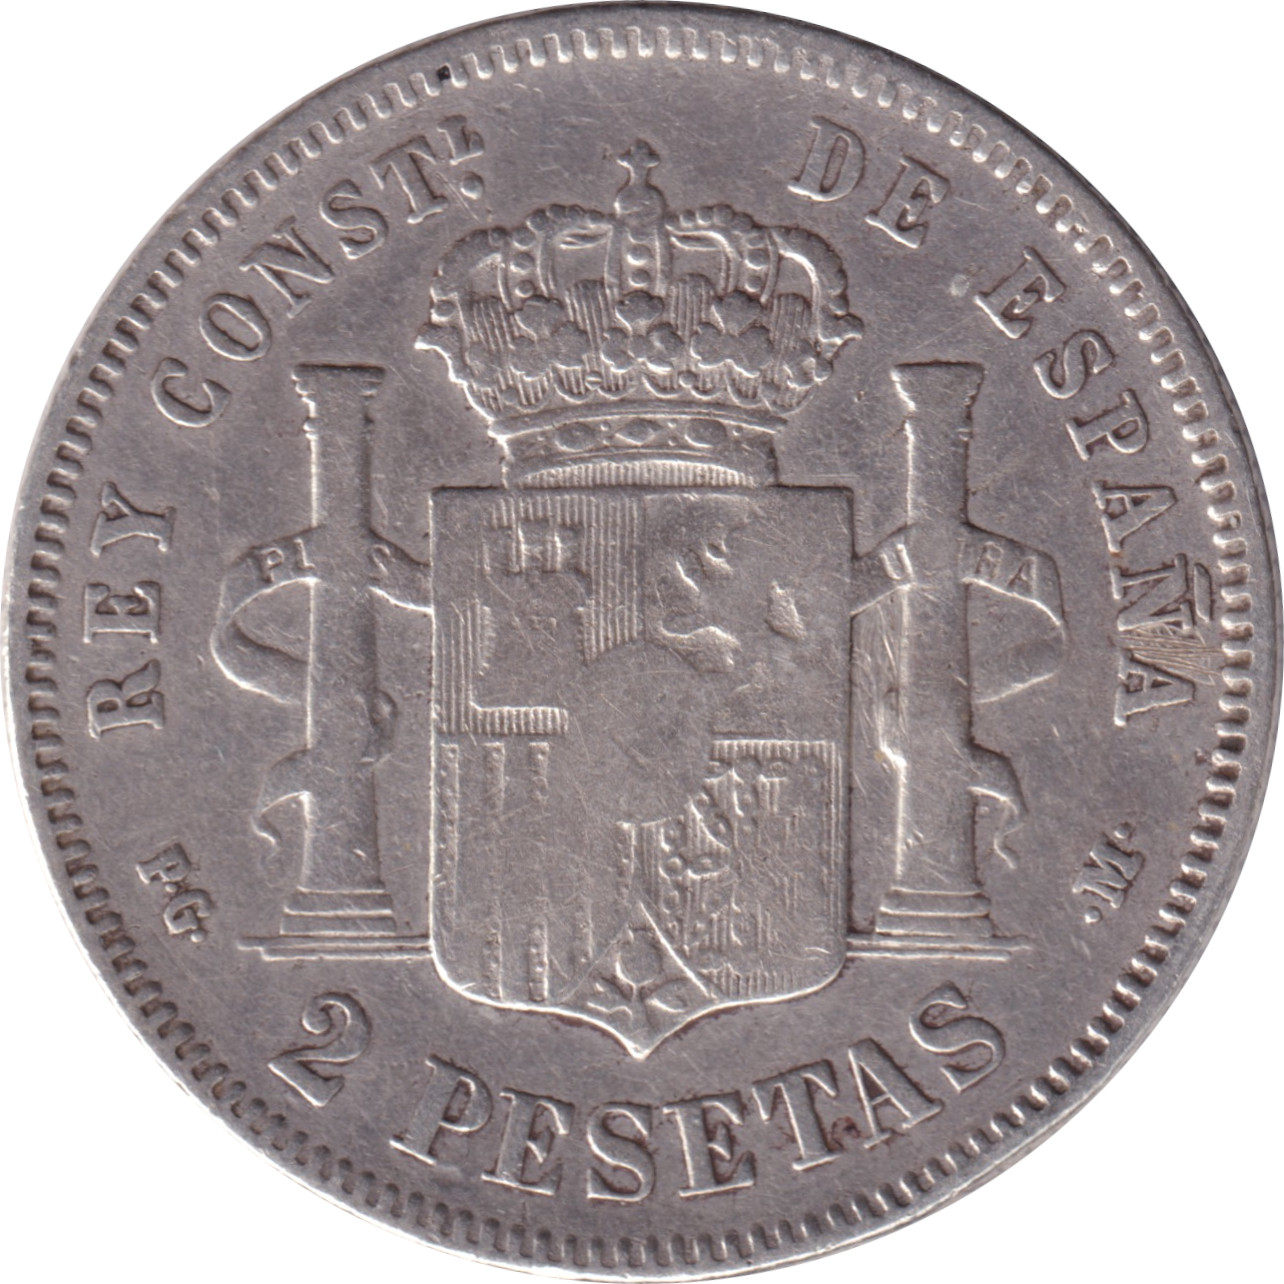 2 pesetas - Alphonse XIII - Buste juvénile